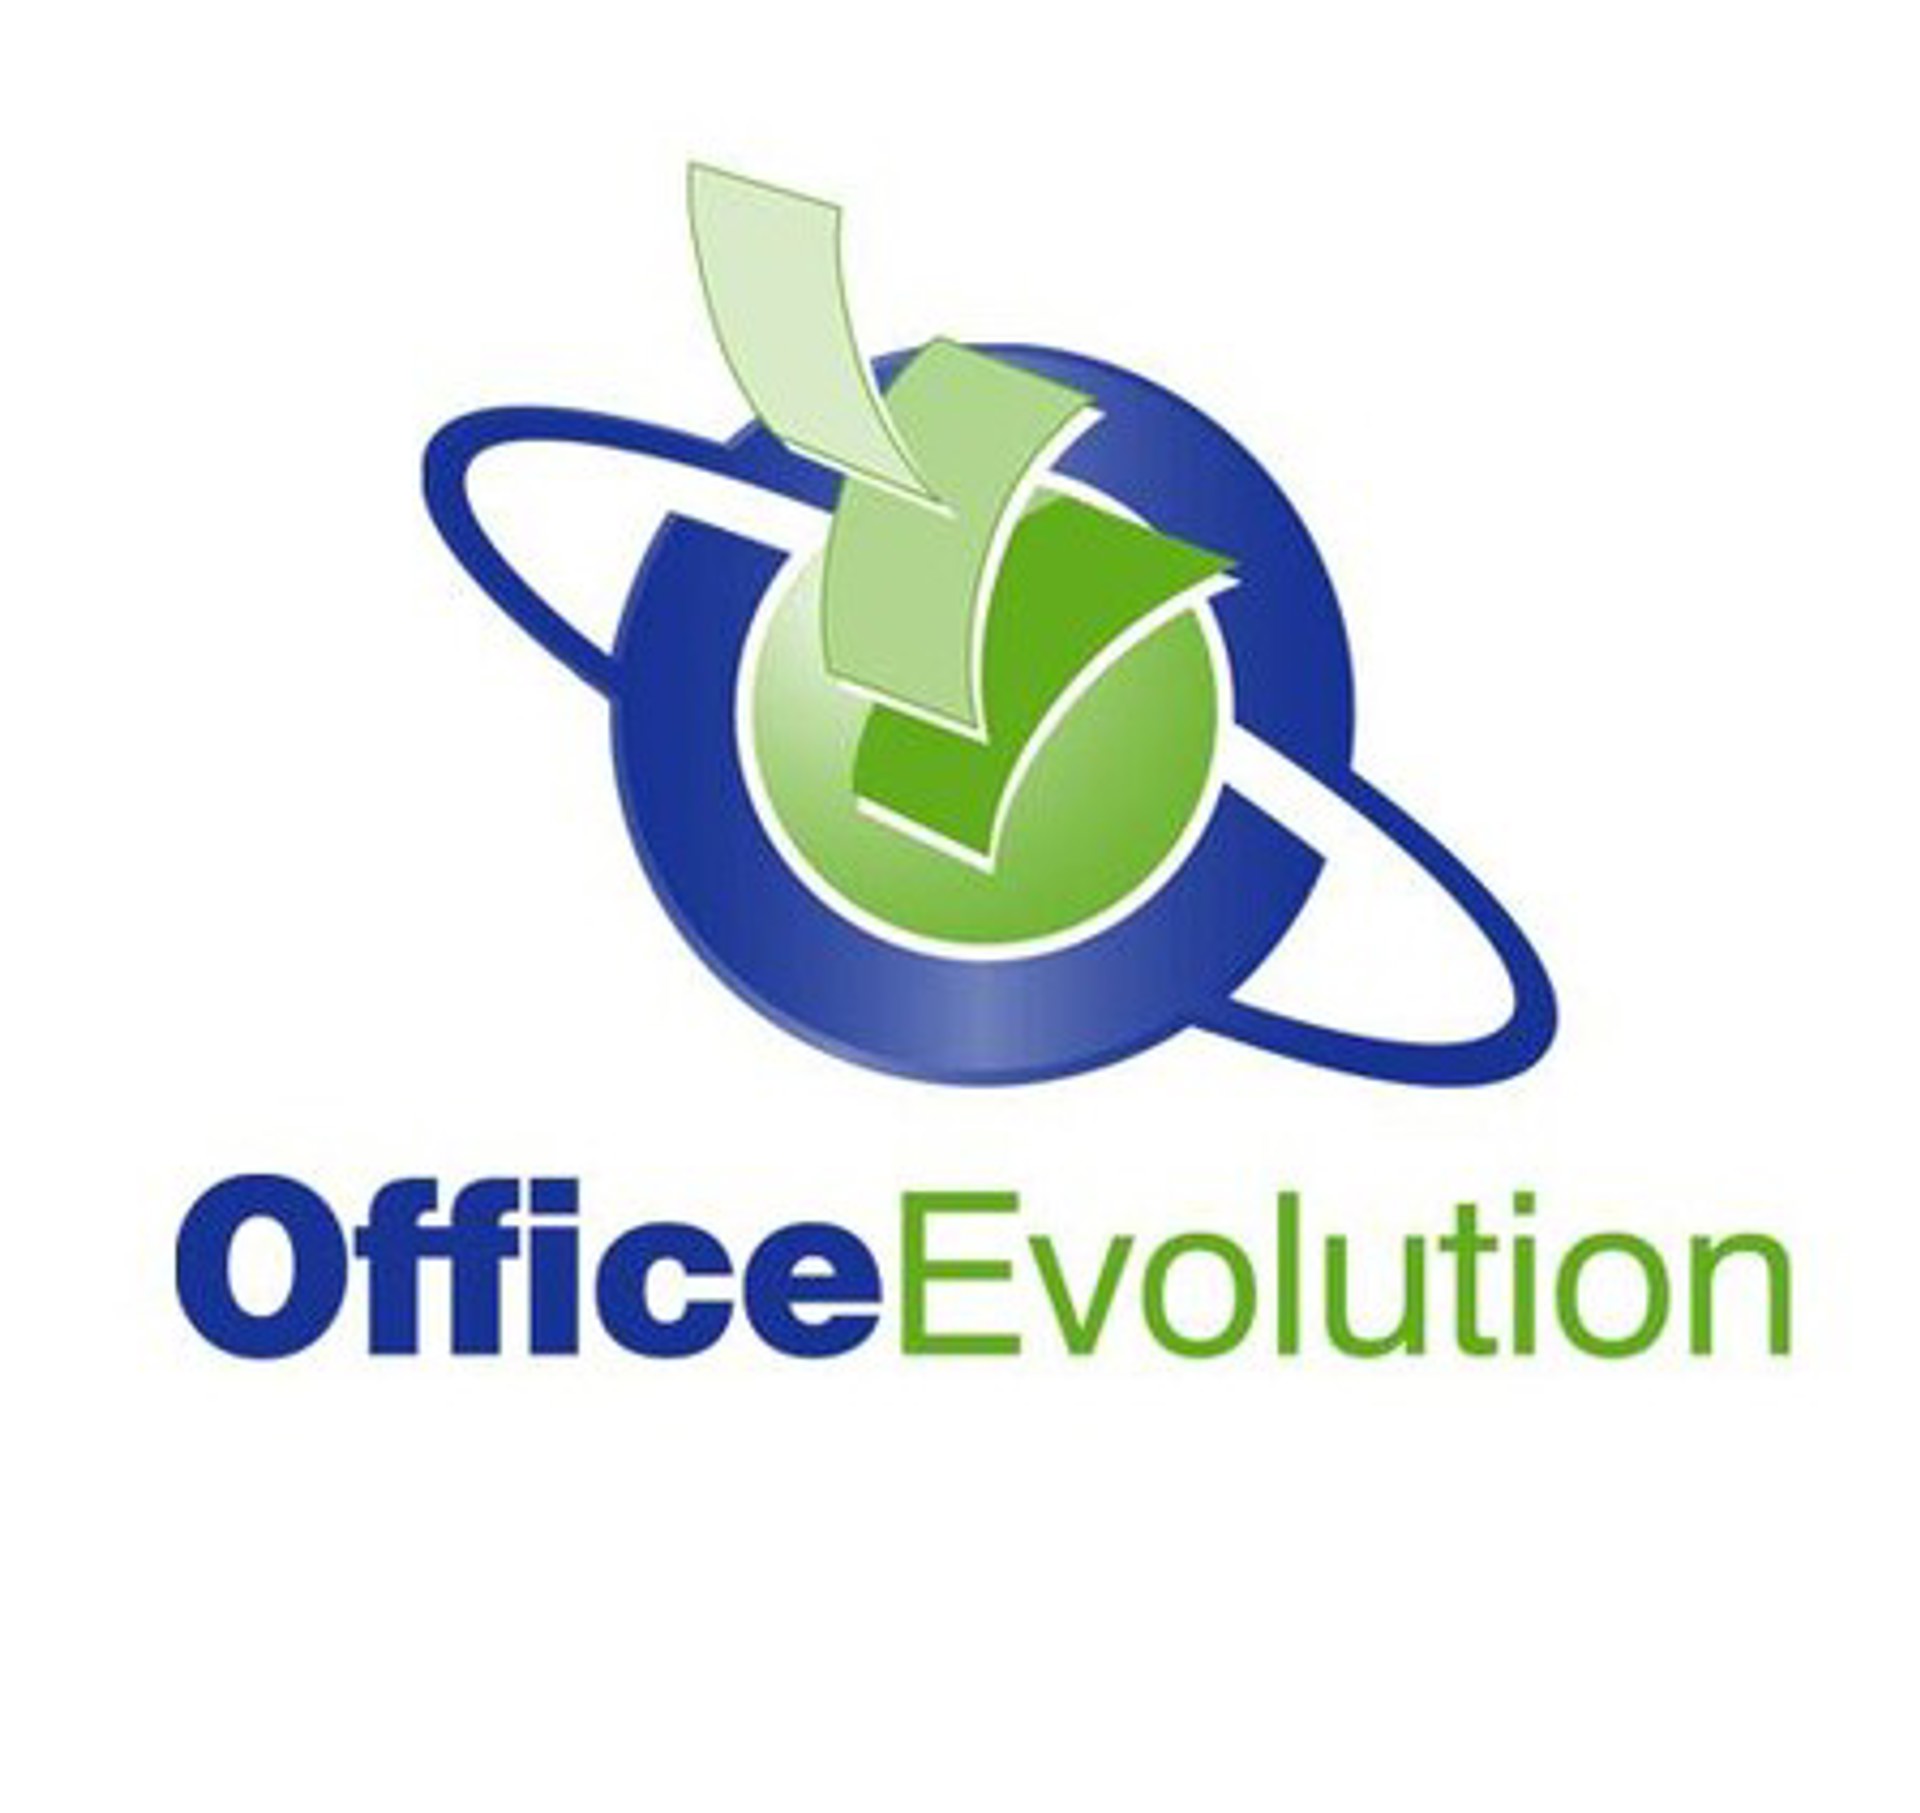 A logo for Office Evolution